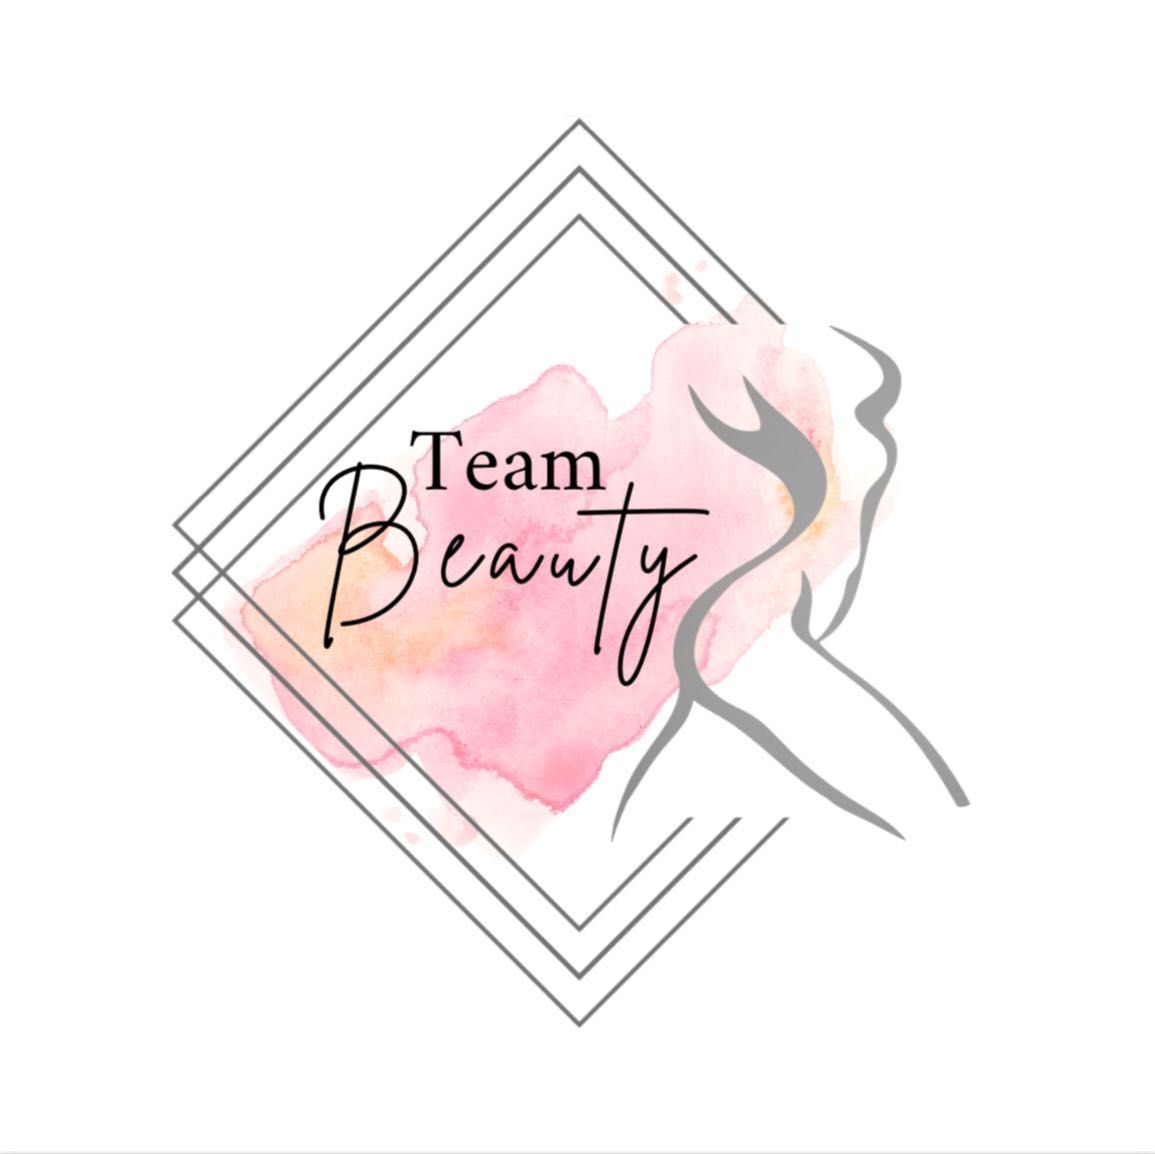 Team Beauty, 1387 Broad St, Providence, 02905